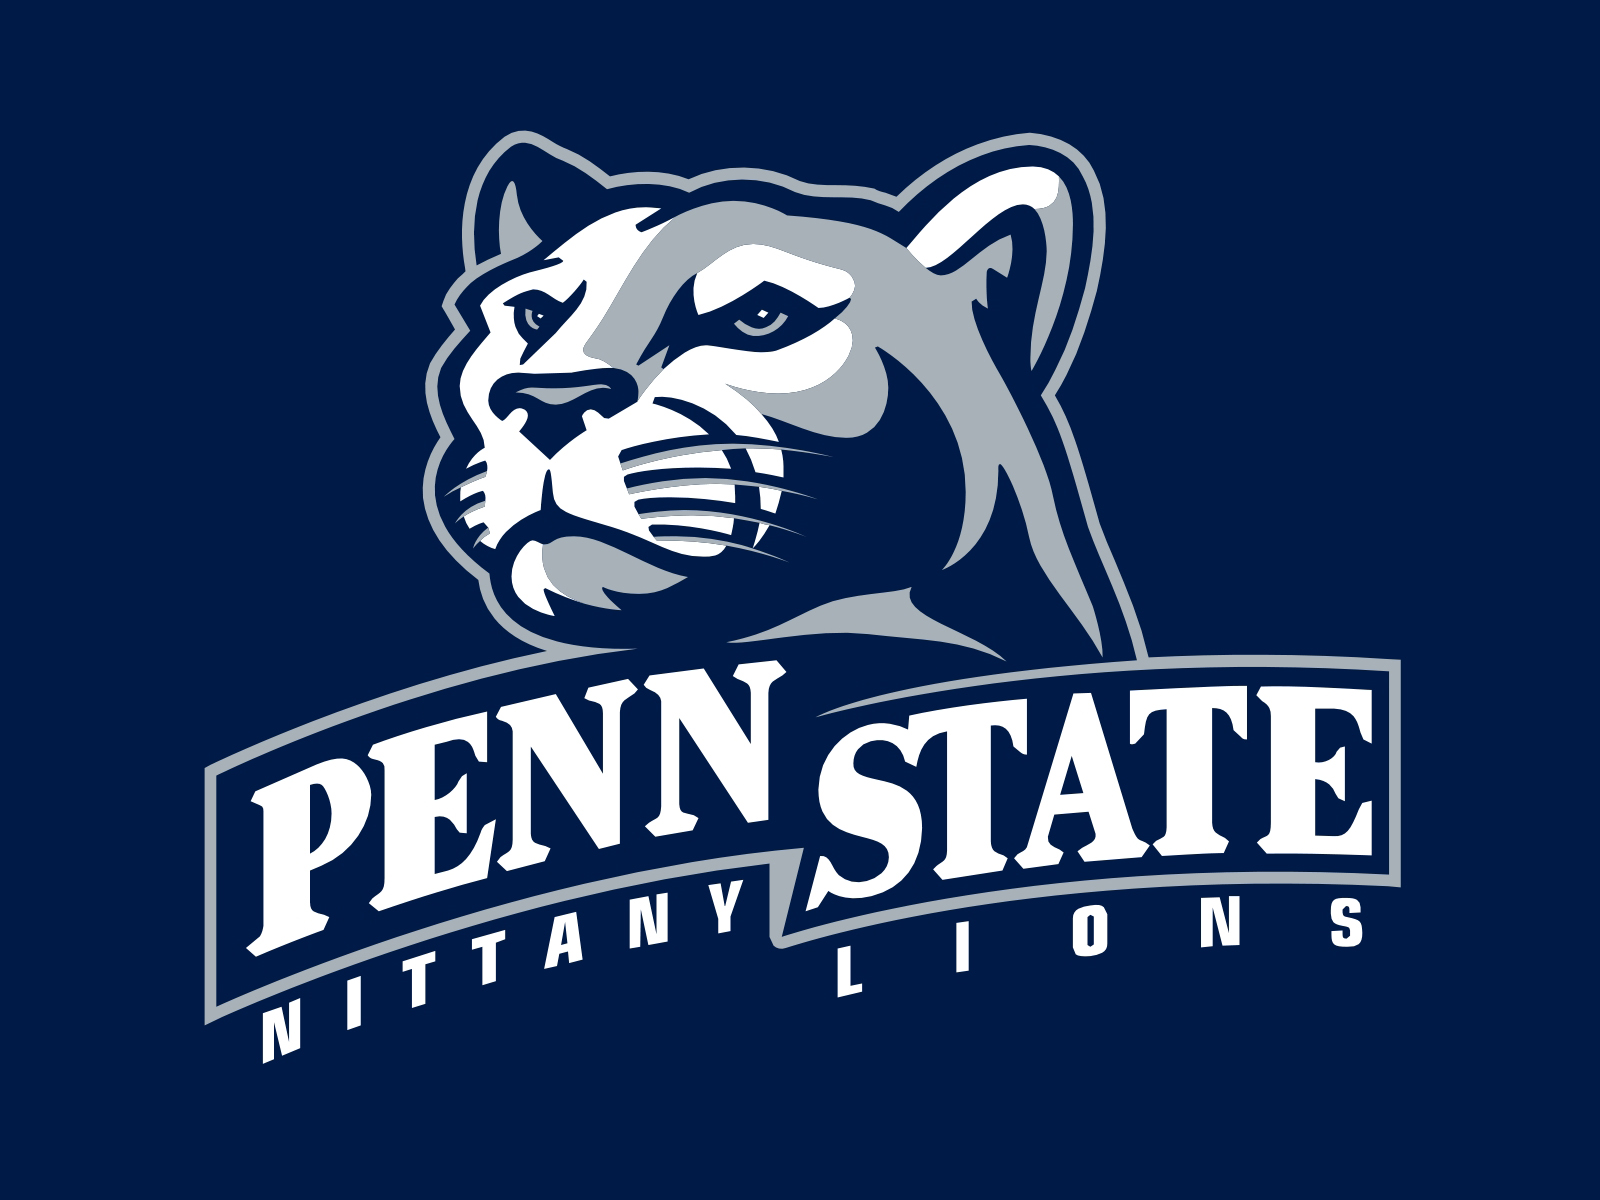 Free download penn state university college football logo [1600x1200